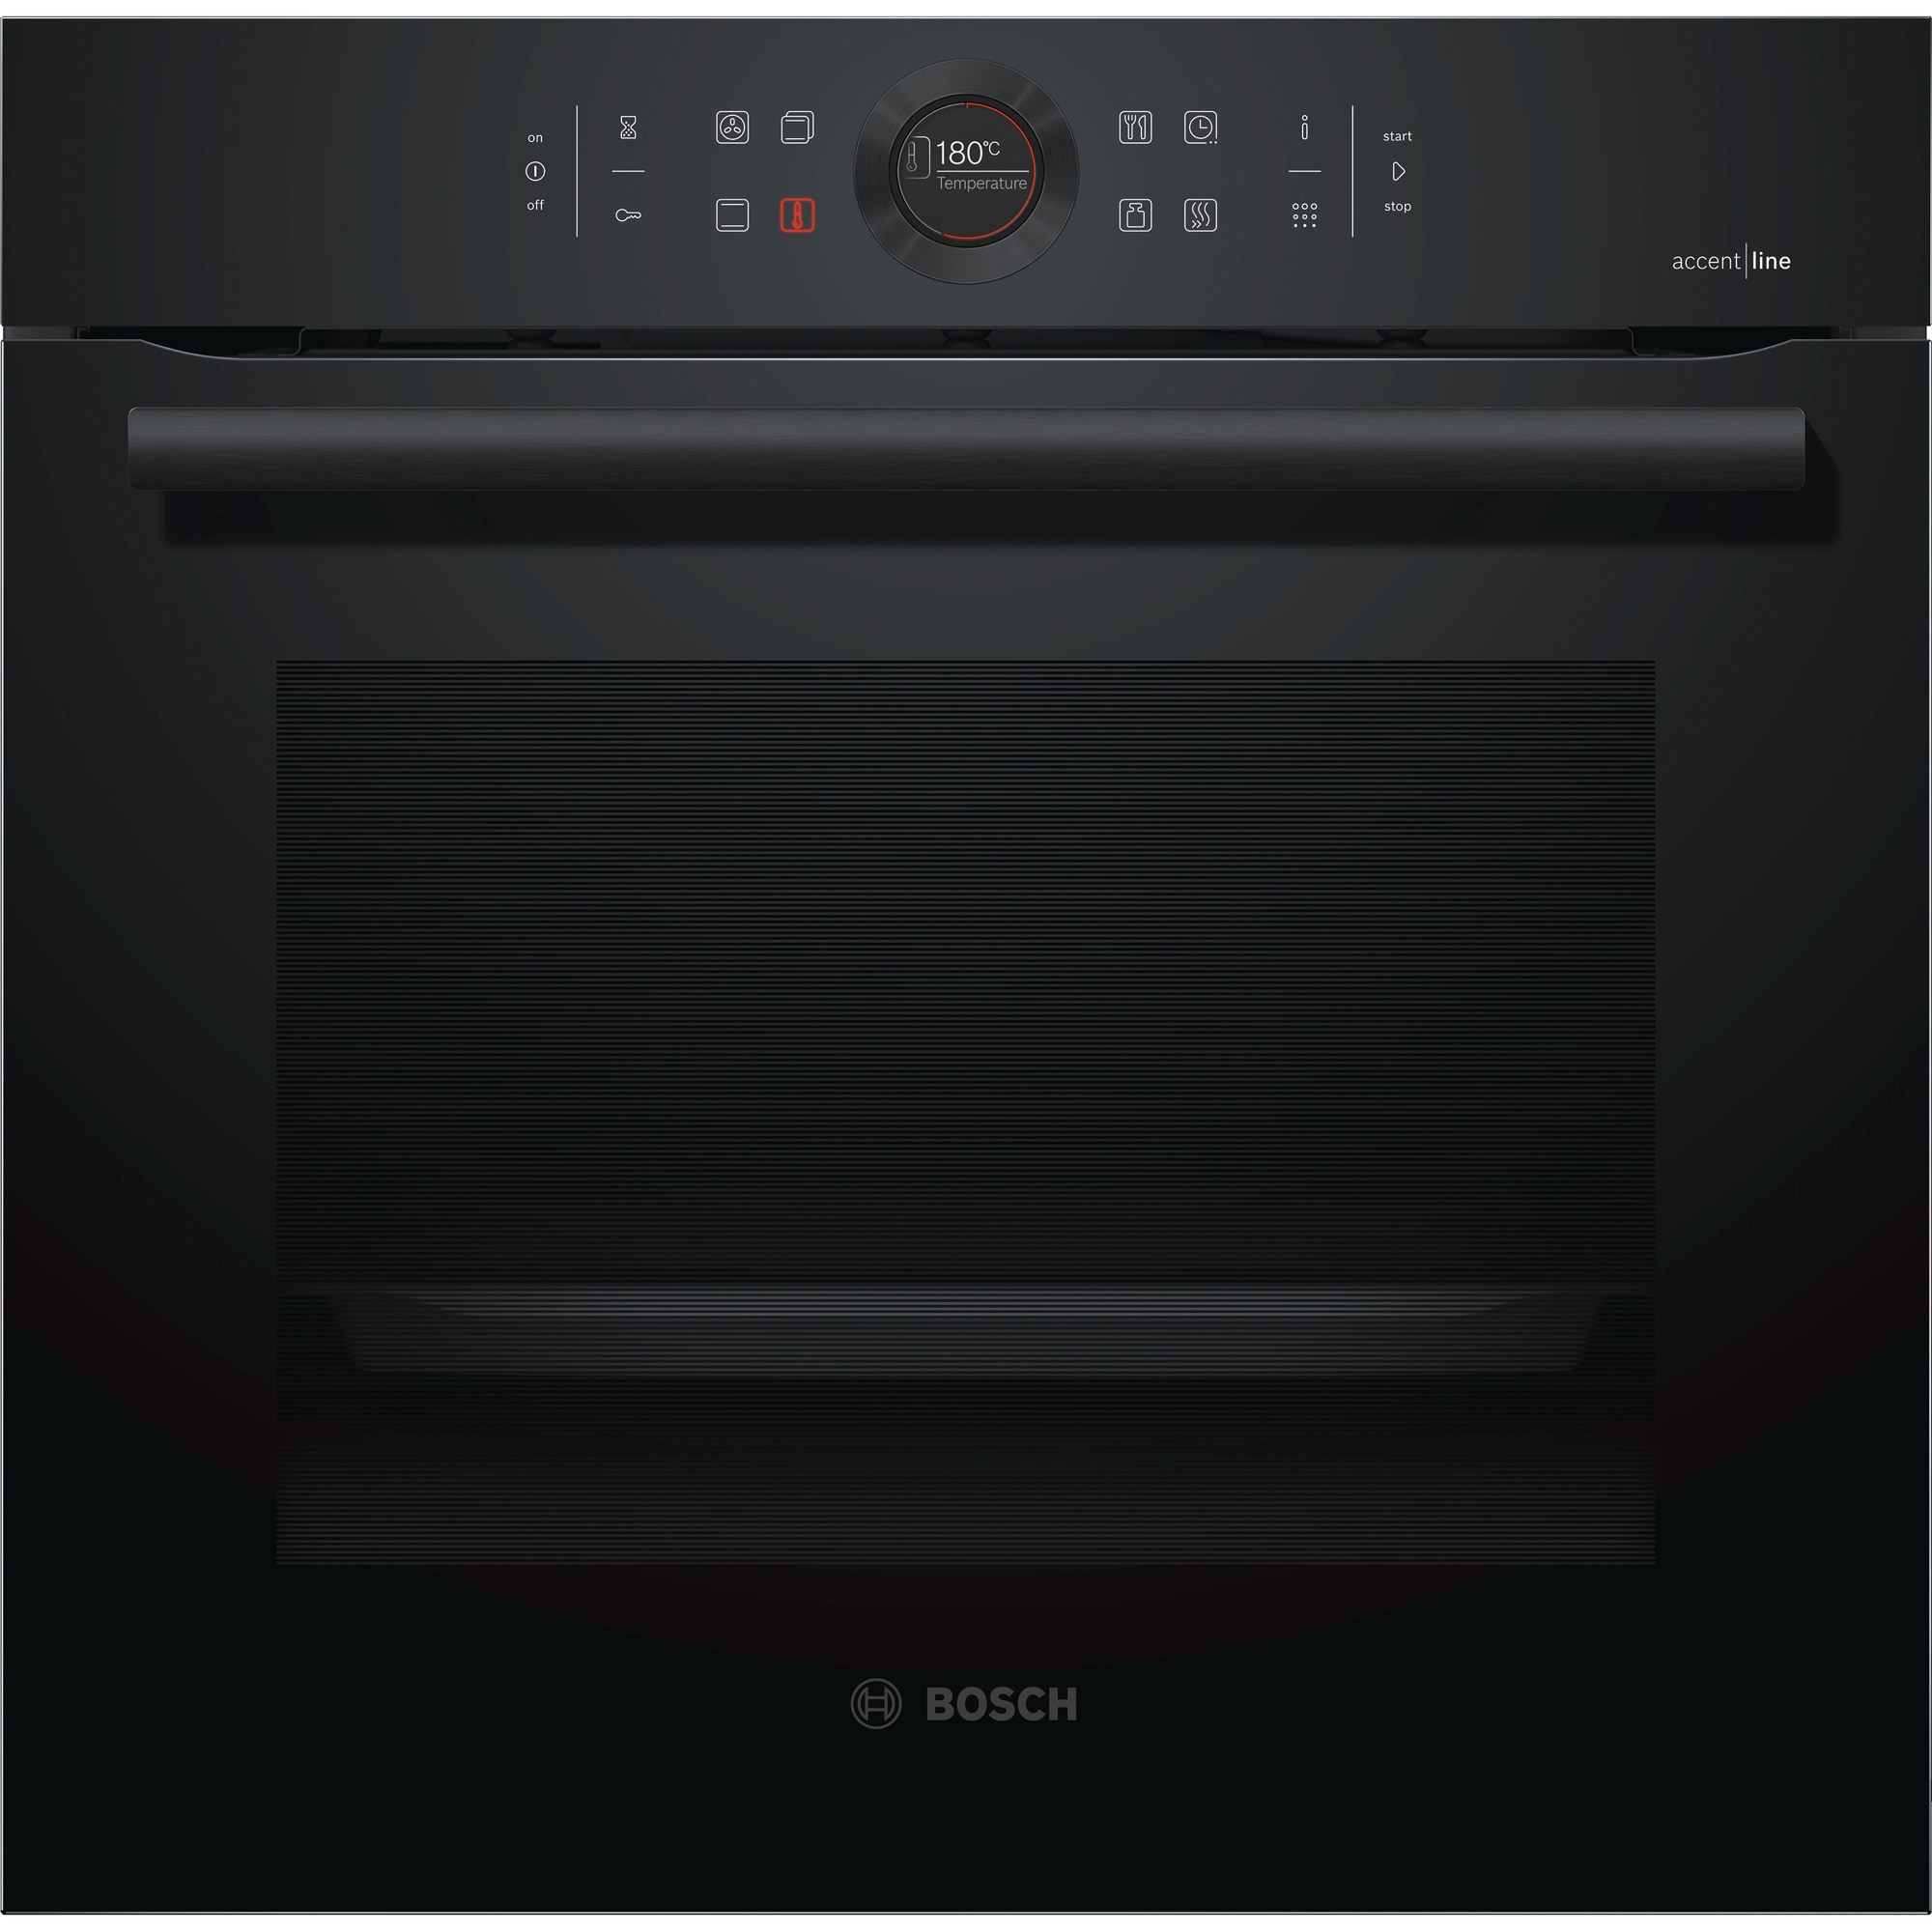 Bosch AccentLine Series 8 integreret ovn